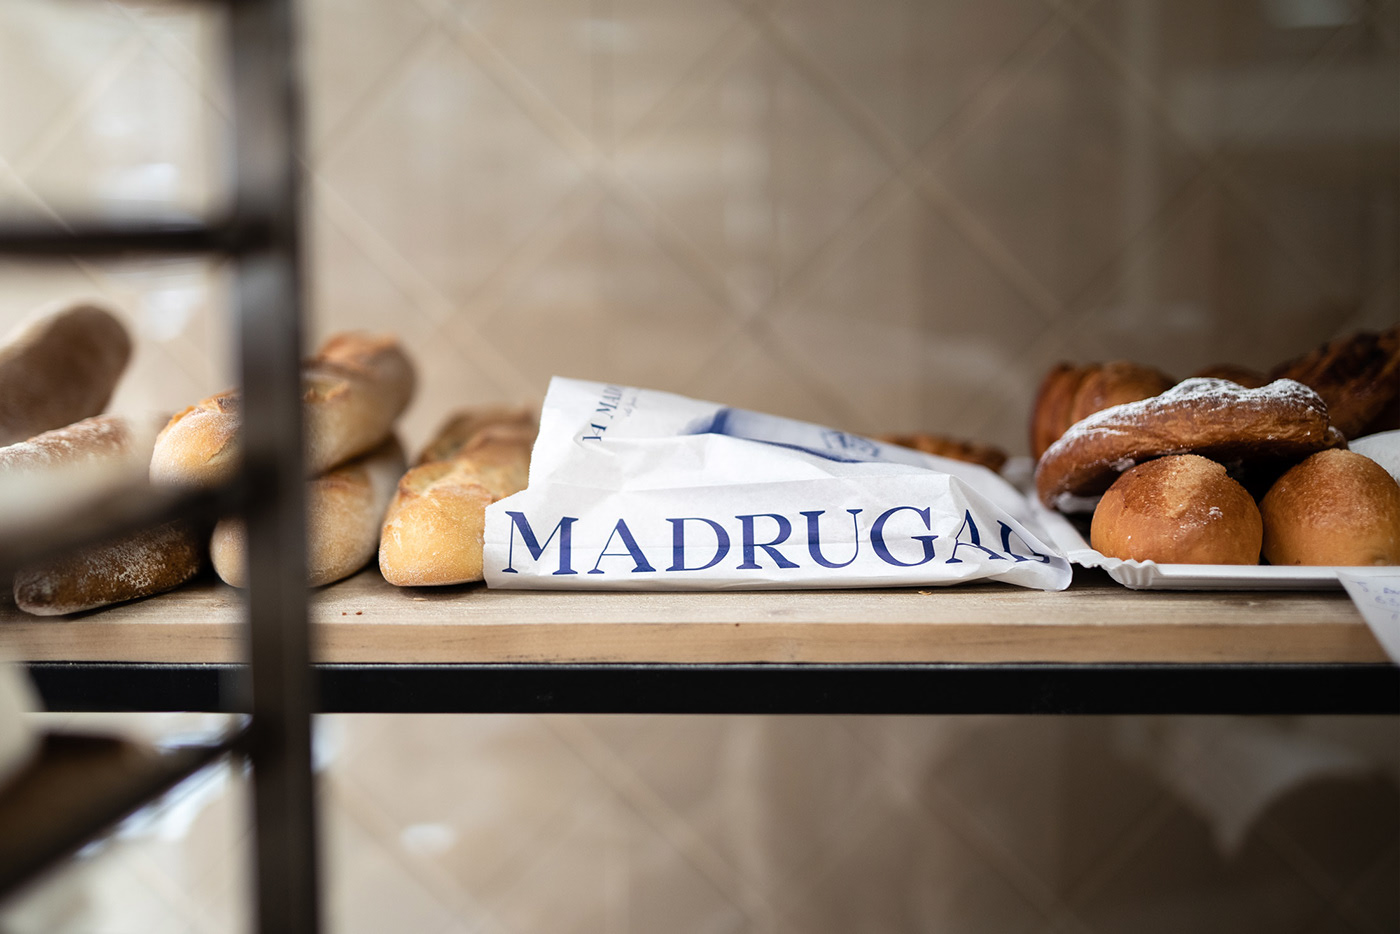 LA MADRUGADA烘焙店品牌形象设计